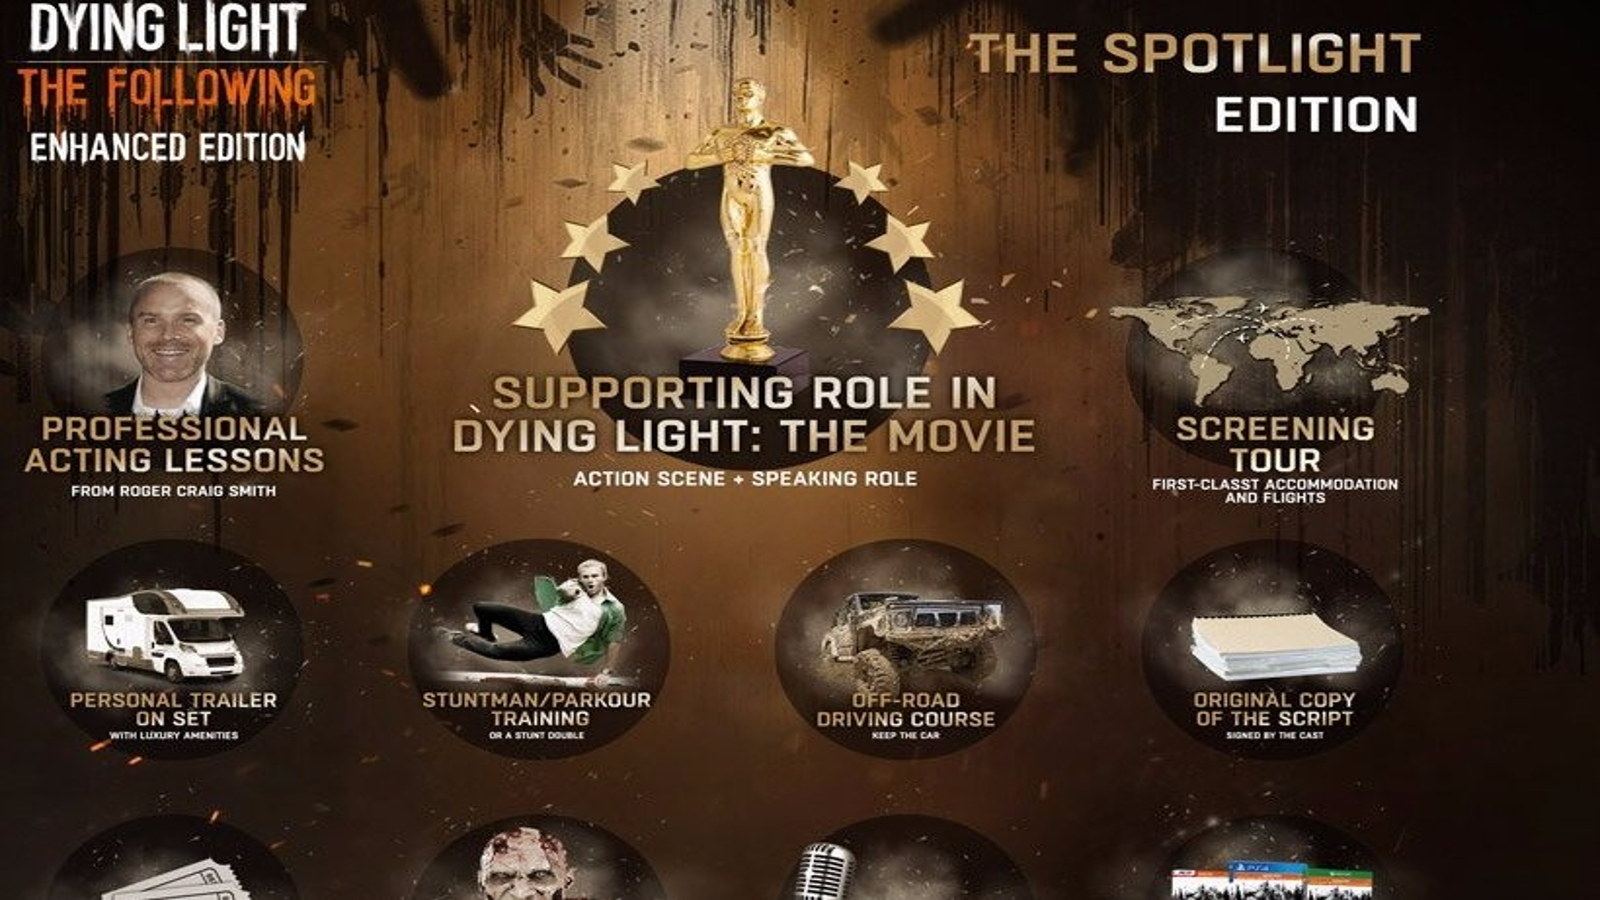 Bond author pens 'Dying Light' zombie game prequel